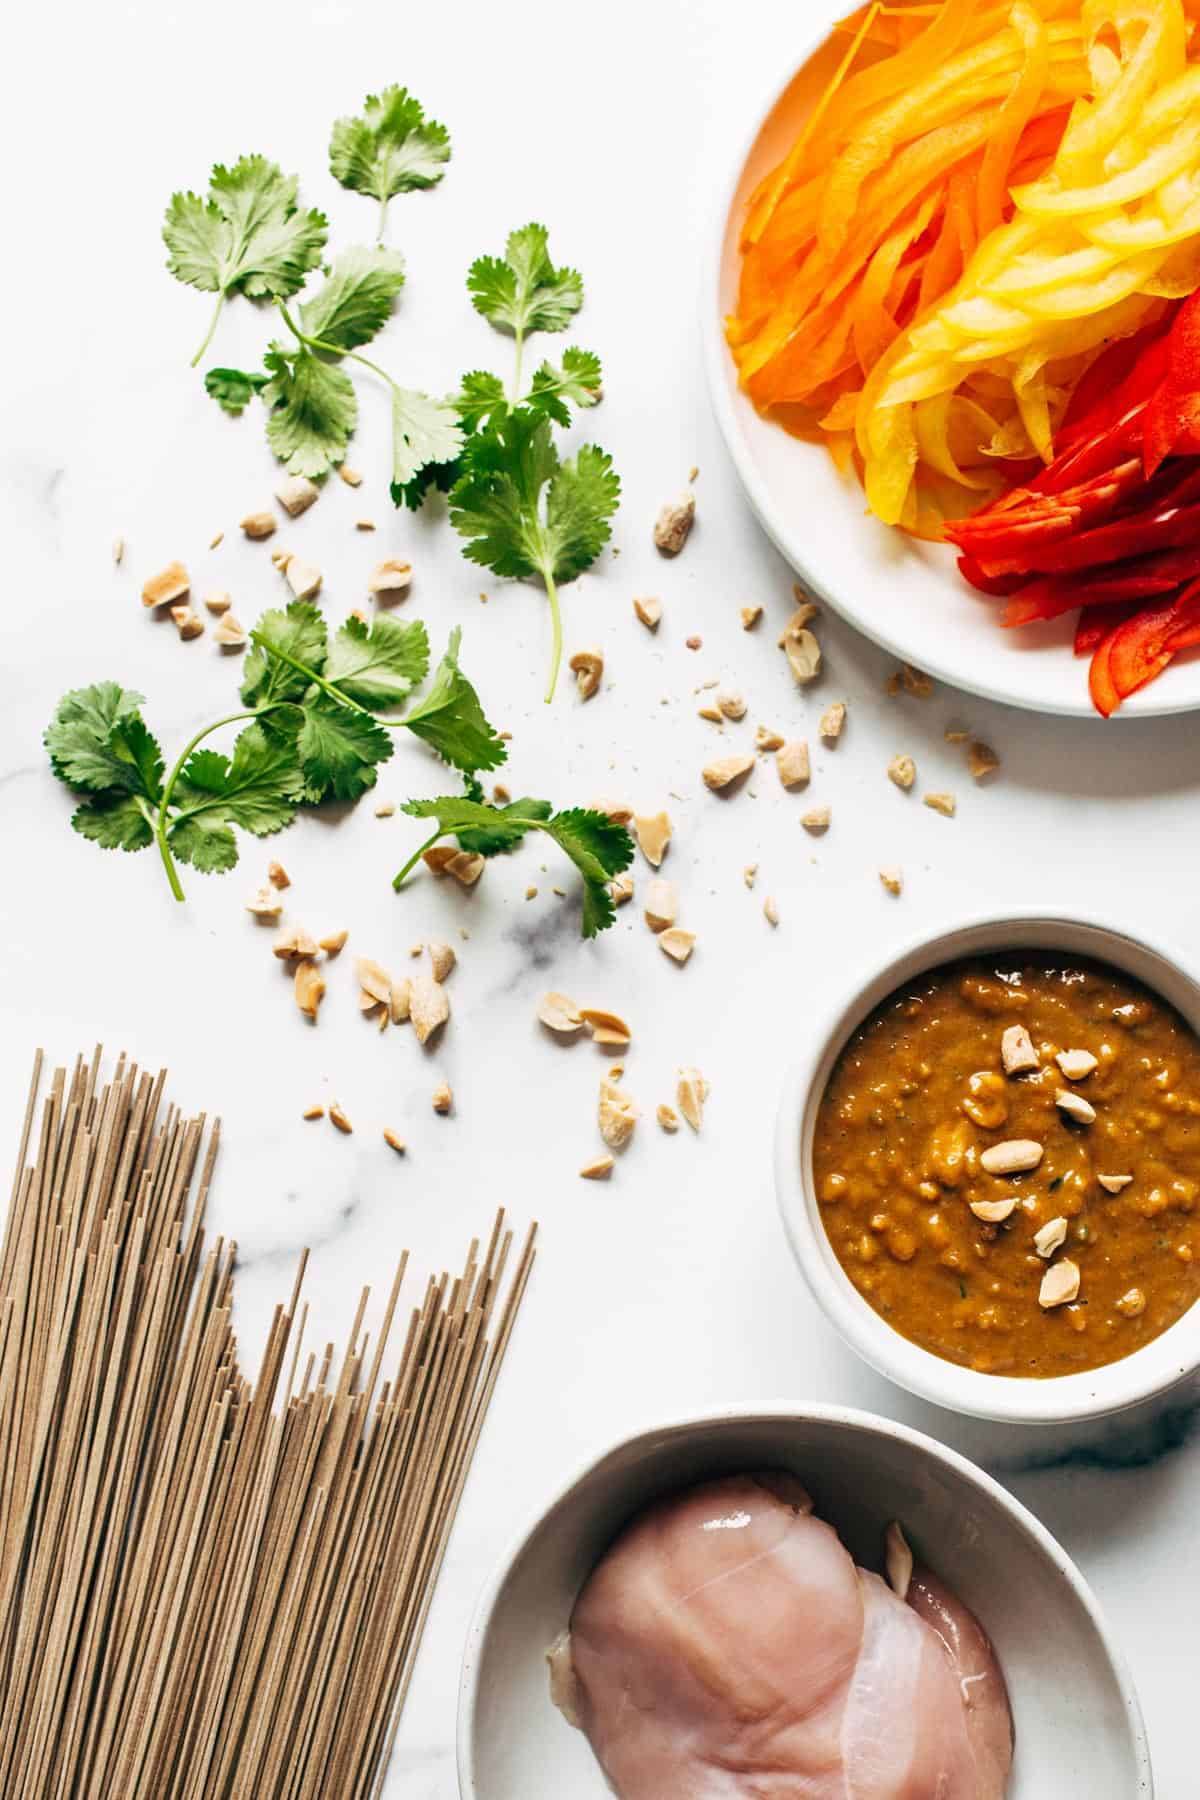 Ingredients for Spicy Peanut Soba Noodle Salad.